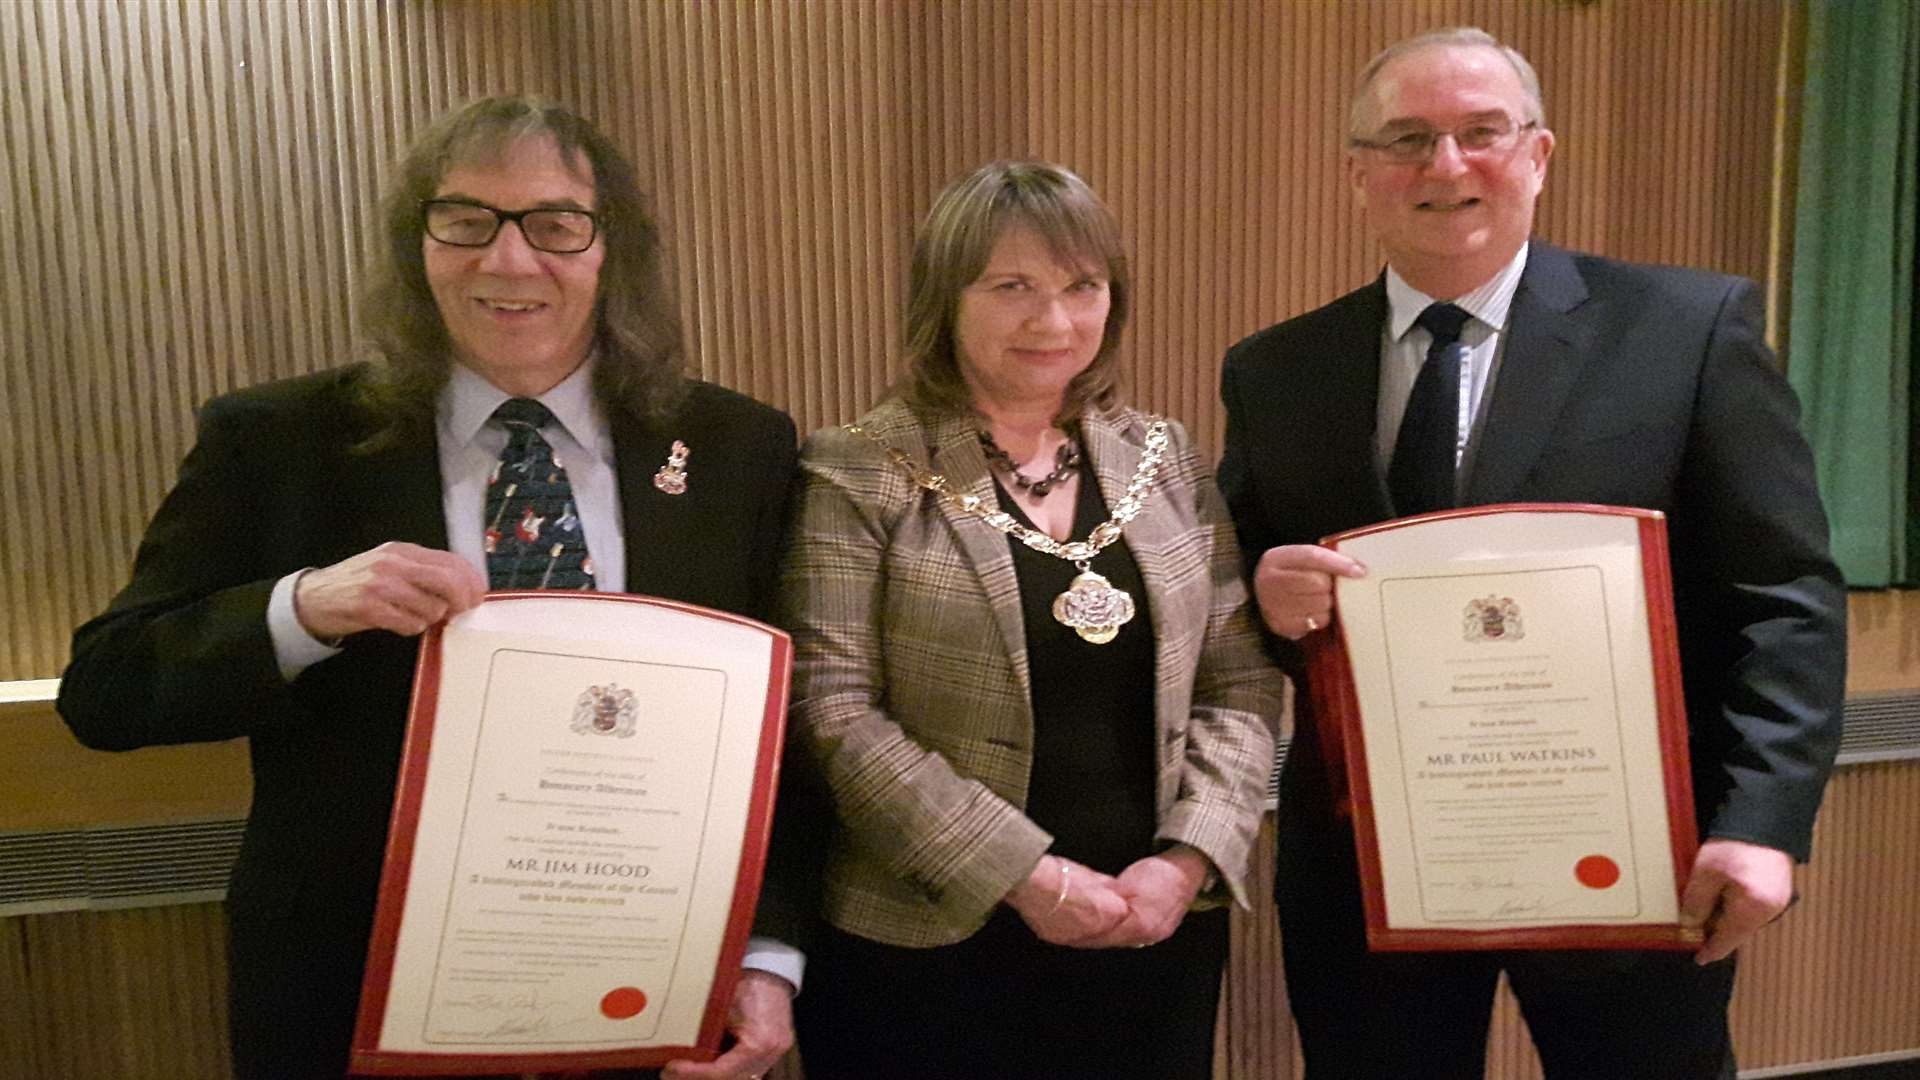 Honorary Aldermen Jim Hood, left, and Paul Watkins with council chairman Sue Chandler